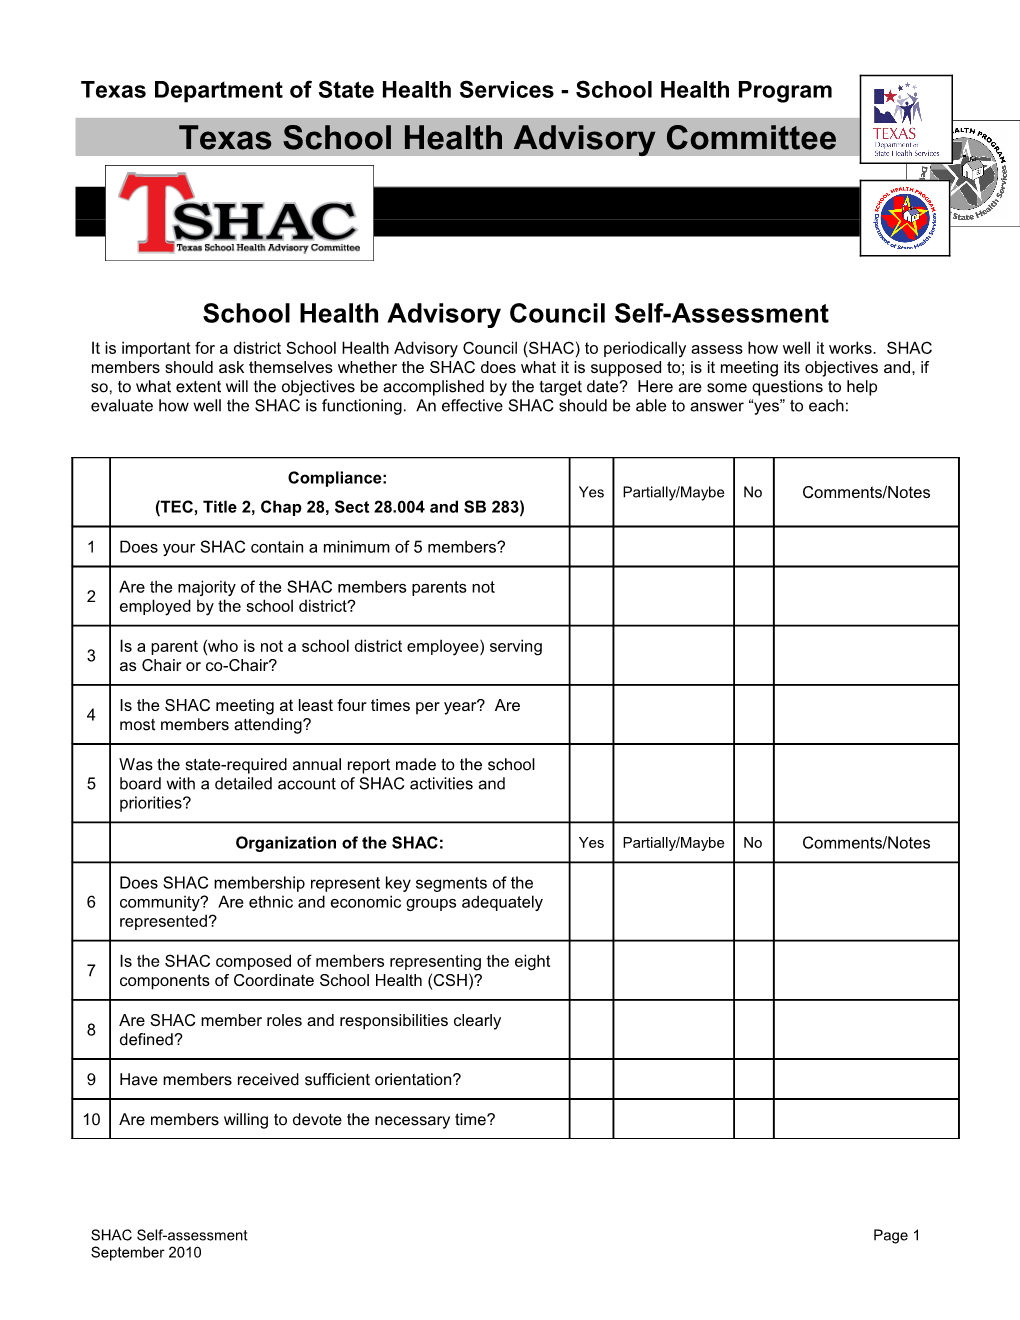 School Health Advisory Council Self-Assessment